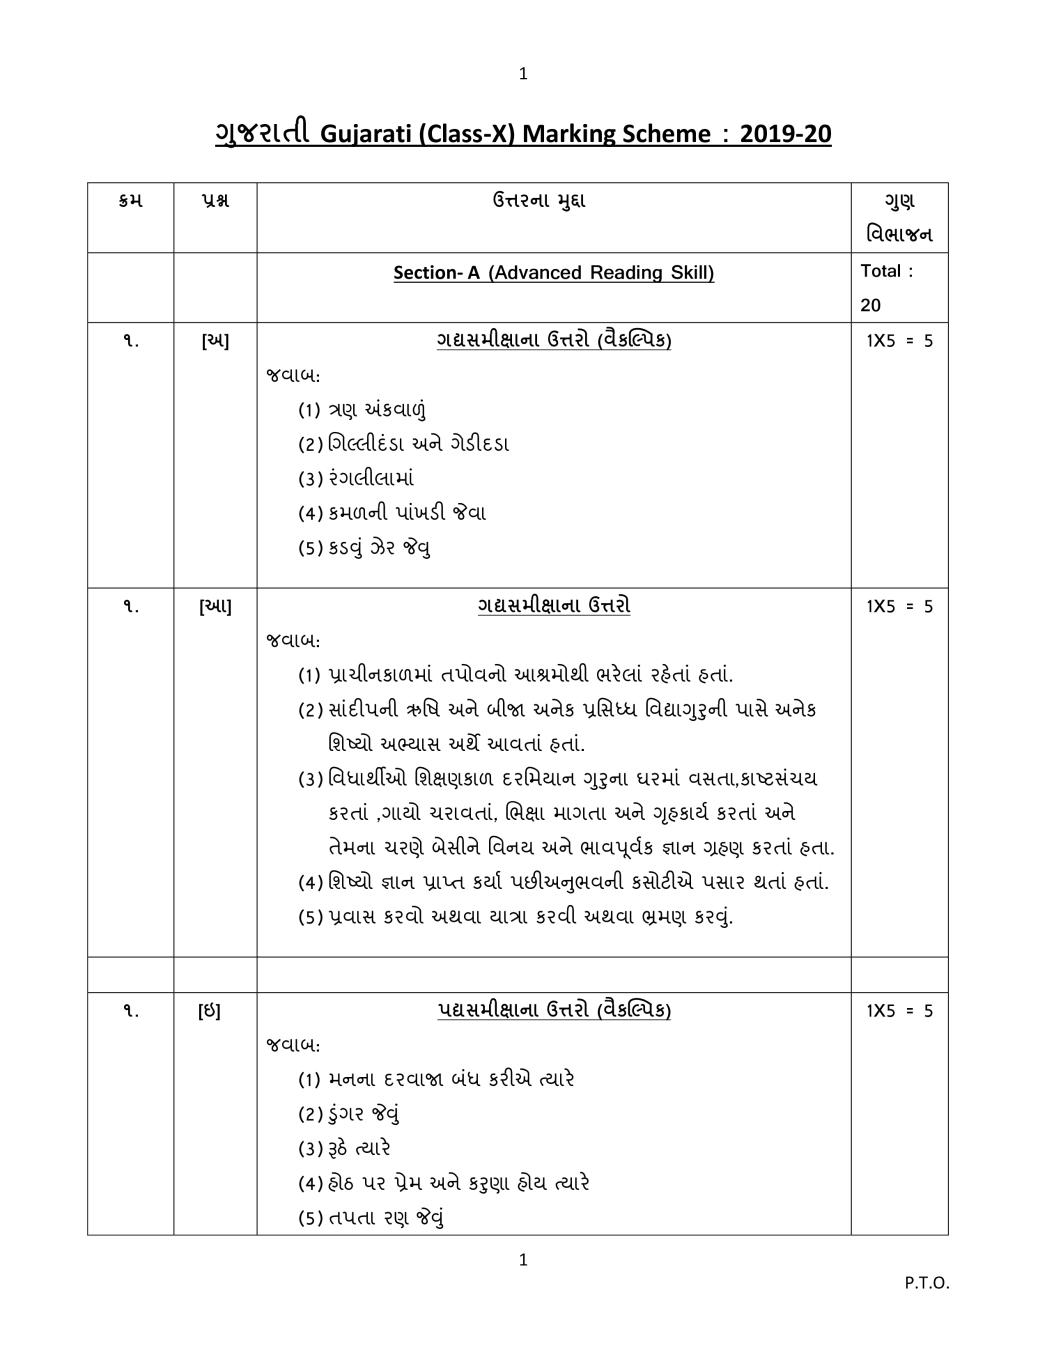 CBSE Class 10 Marking Scheme 2020 for Gujarati - Page 1